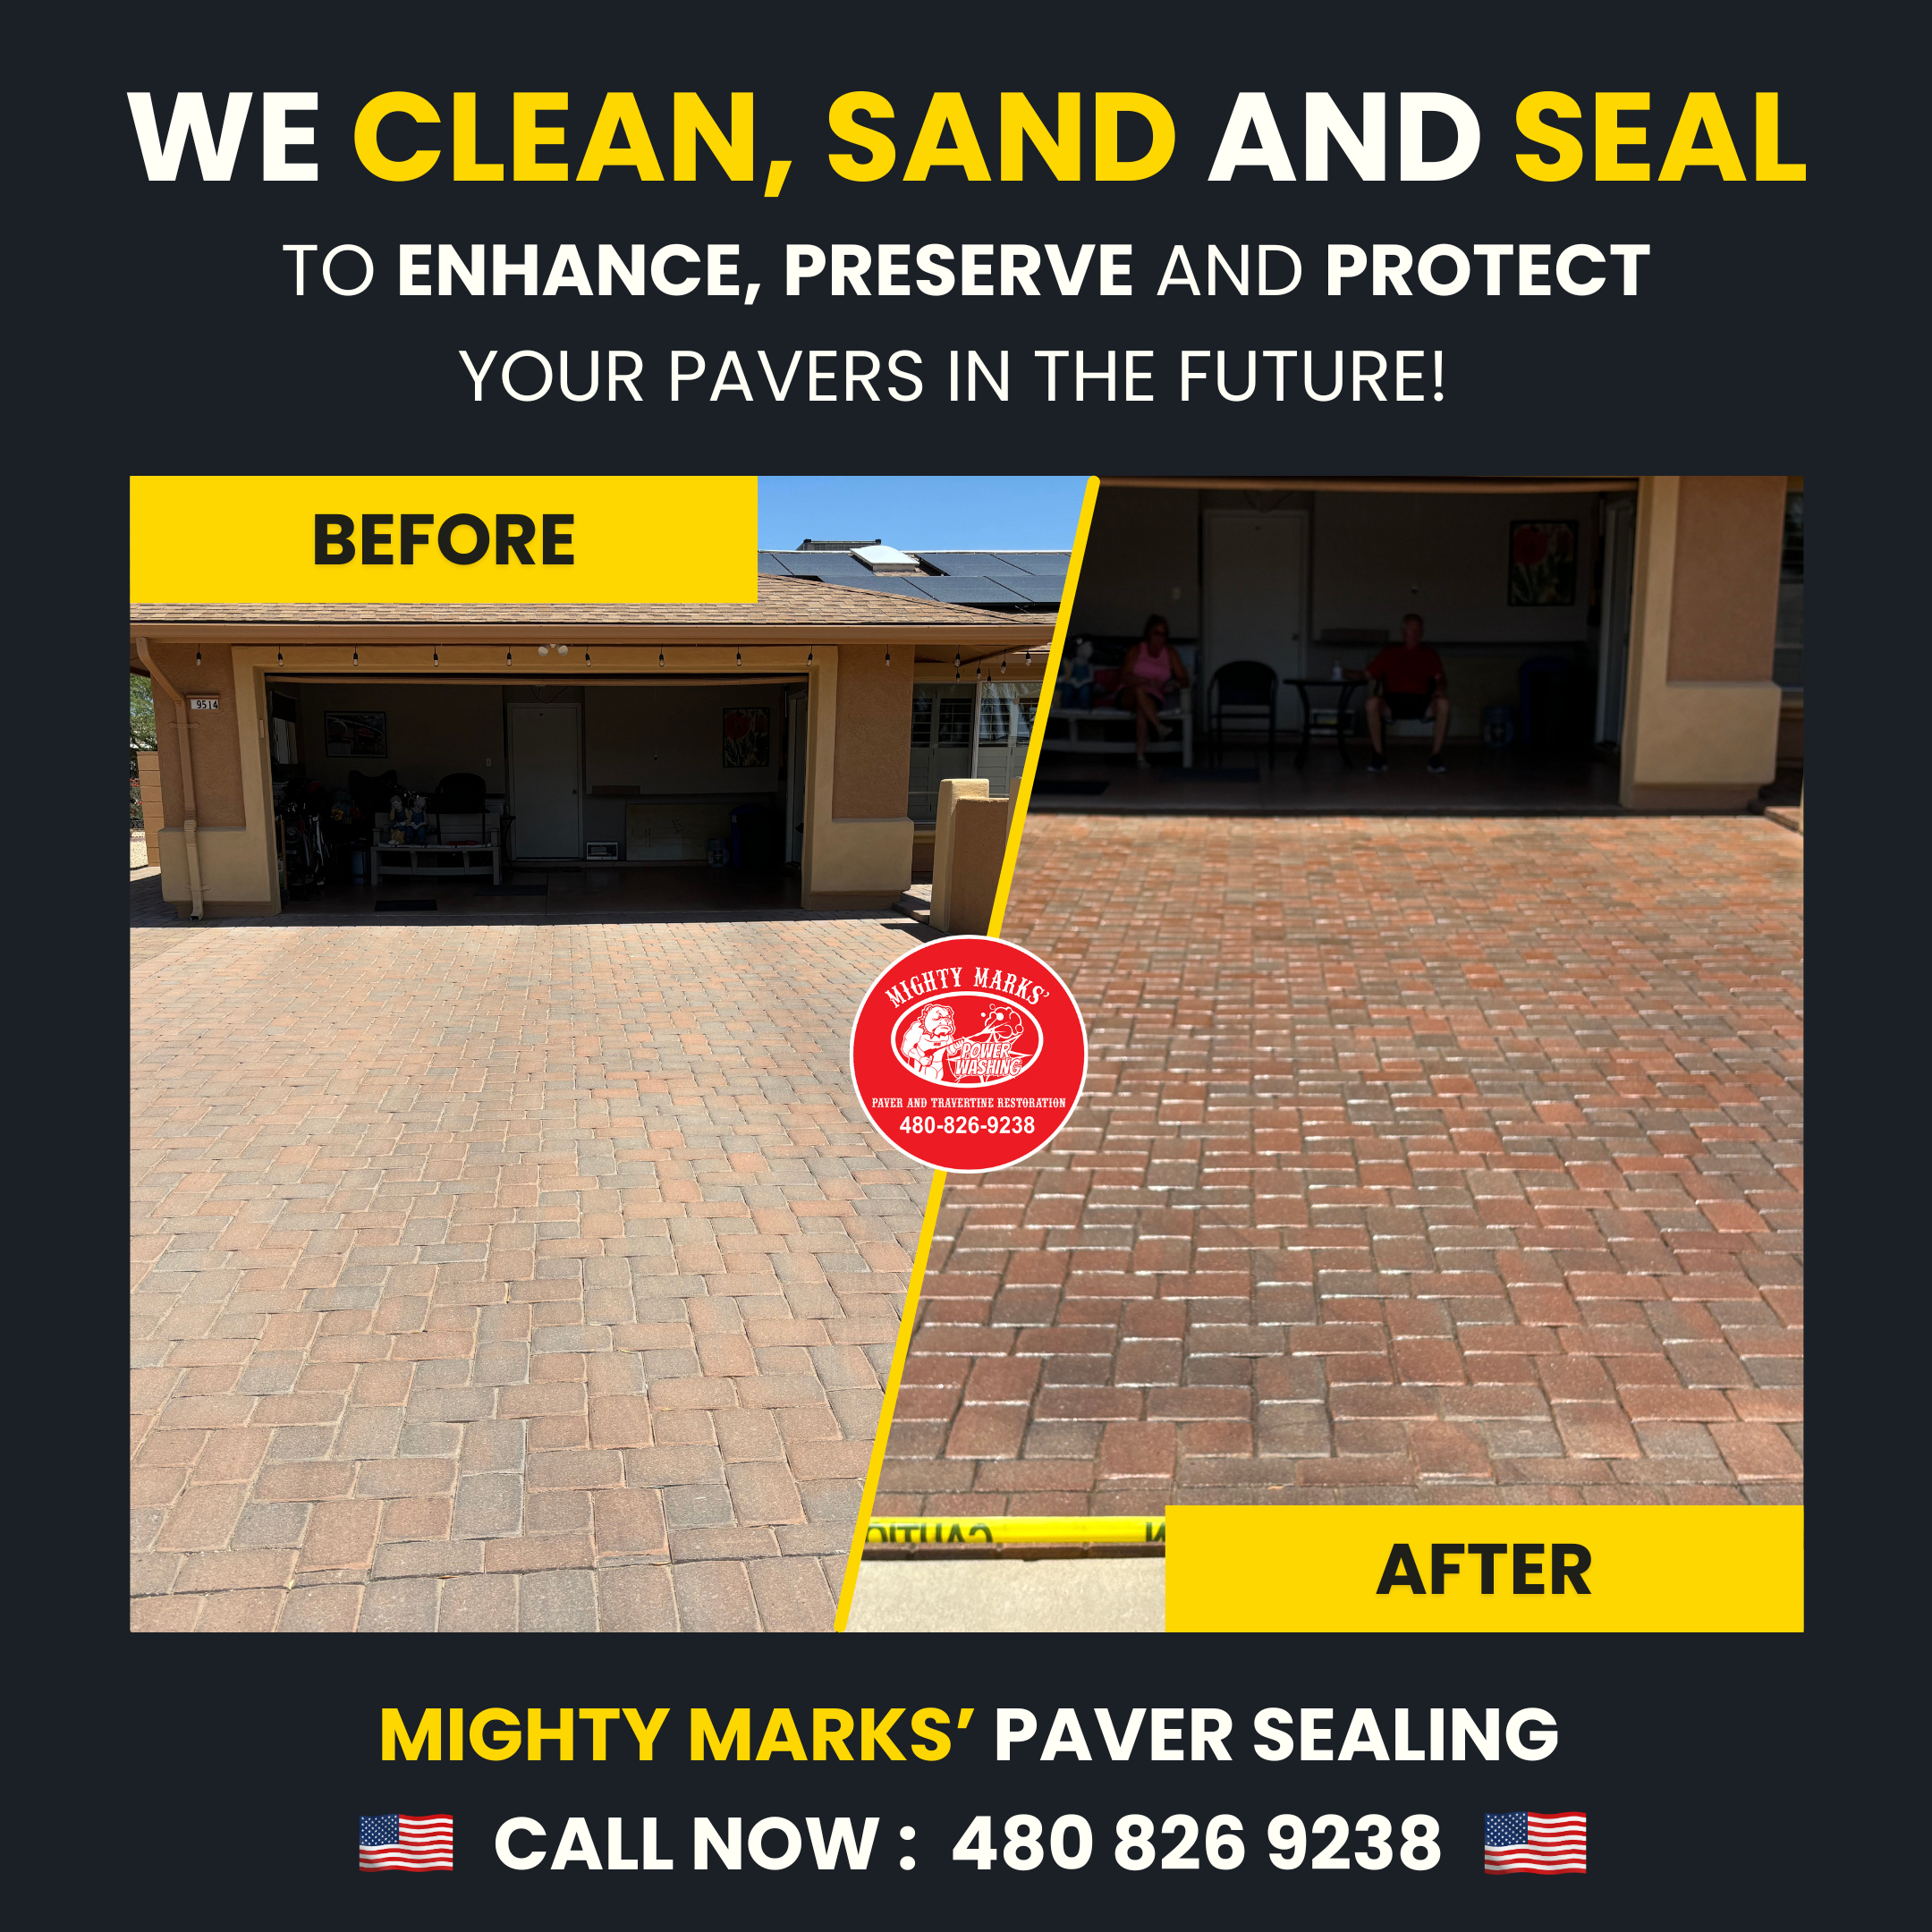 Sun city paver sealing service